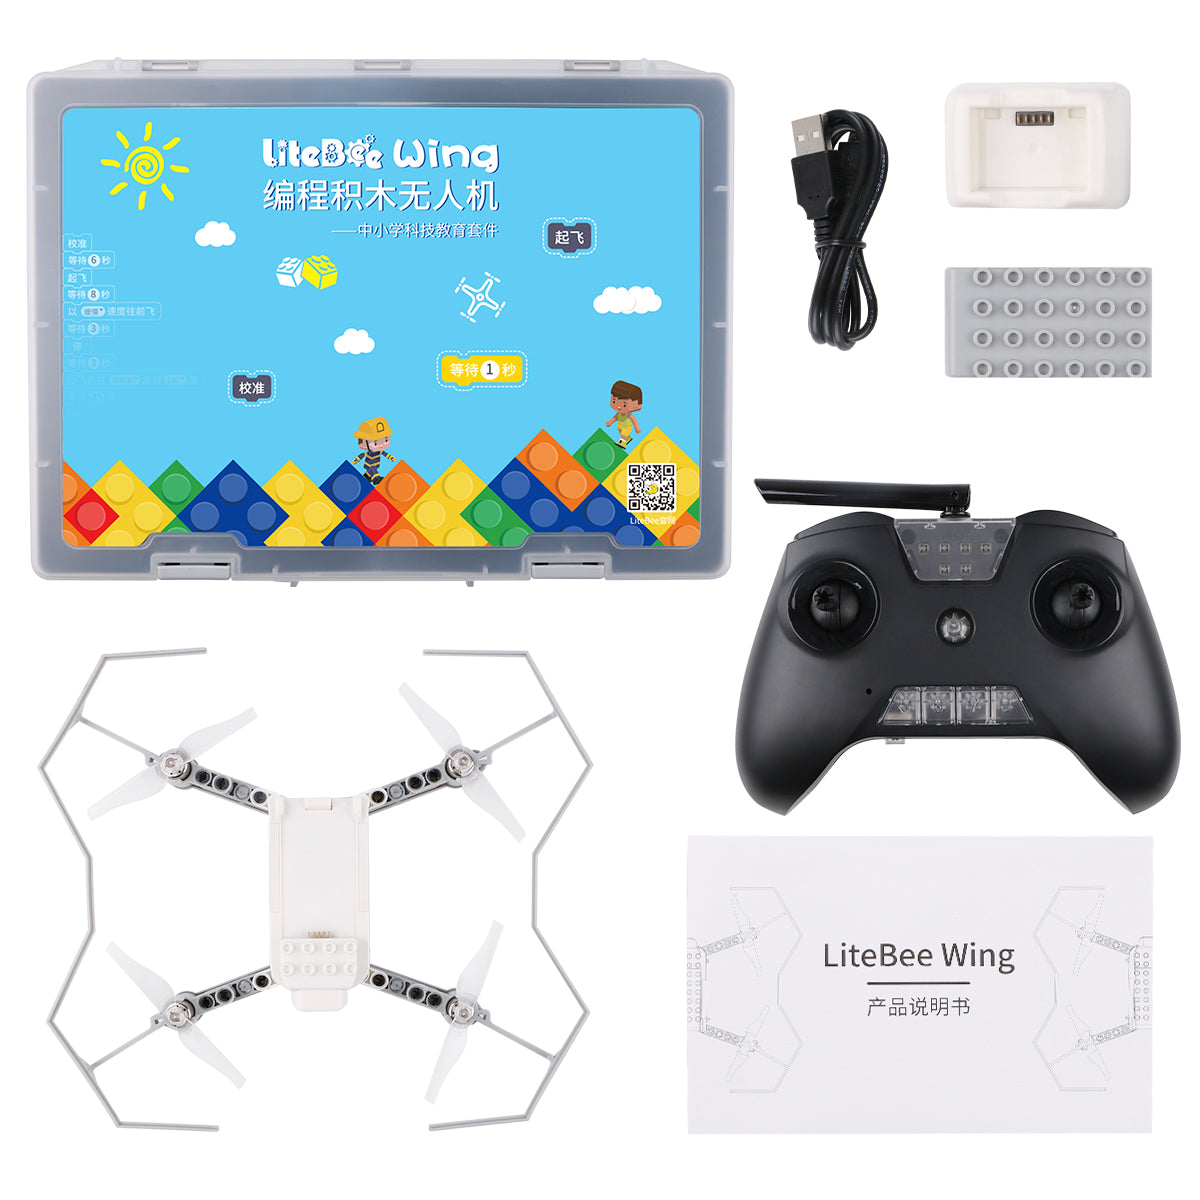 Litebee Wing Coding Drone